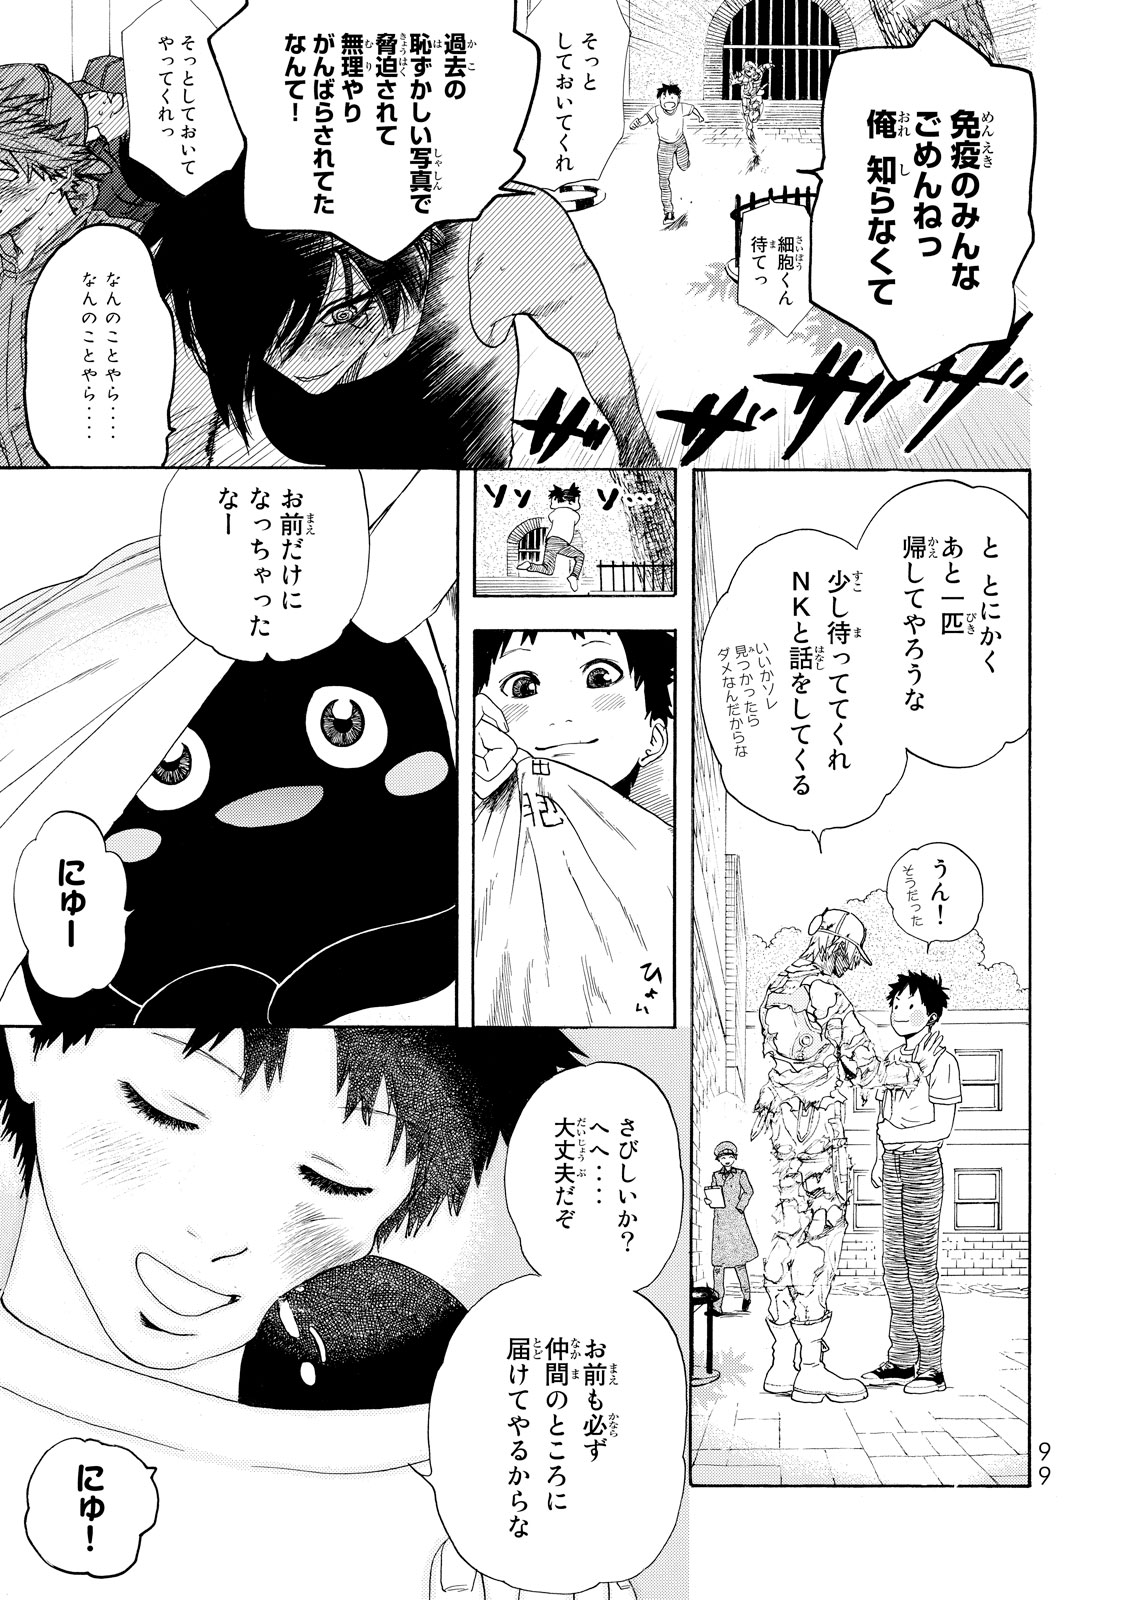 Hataraku Saibou - Chapter 22 - Page 25